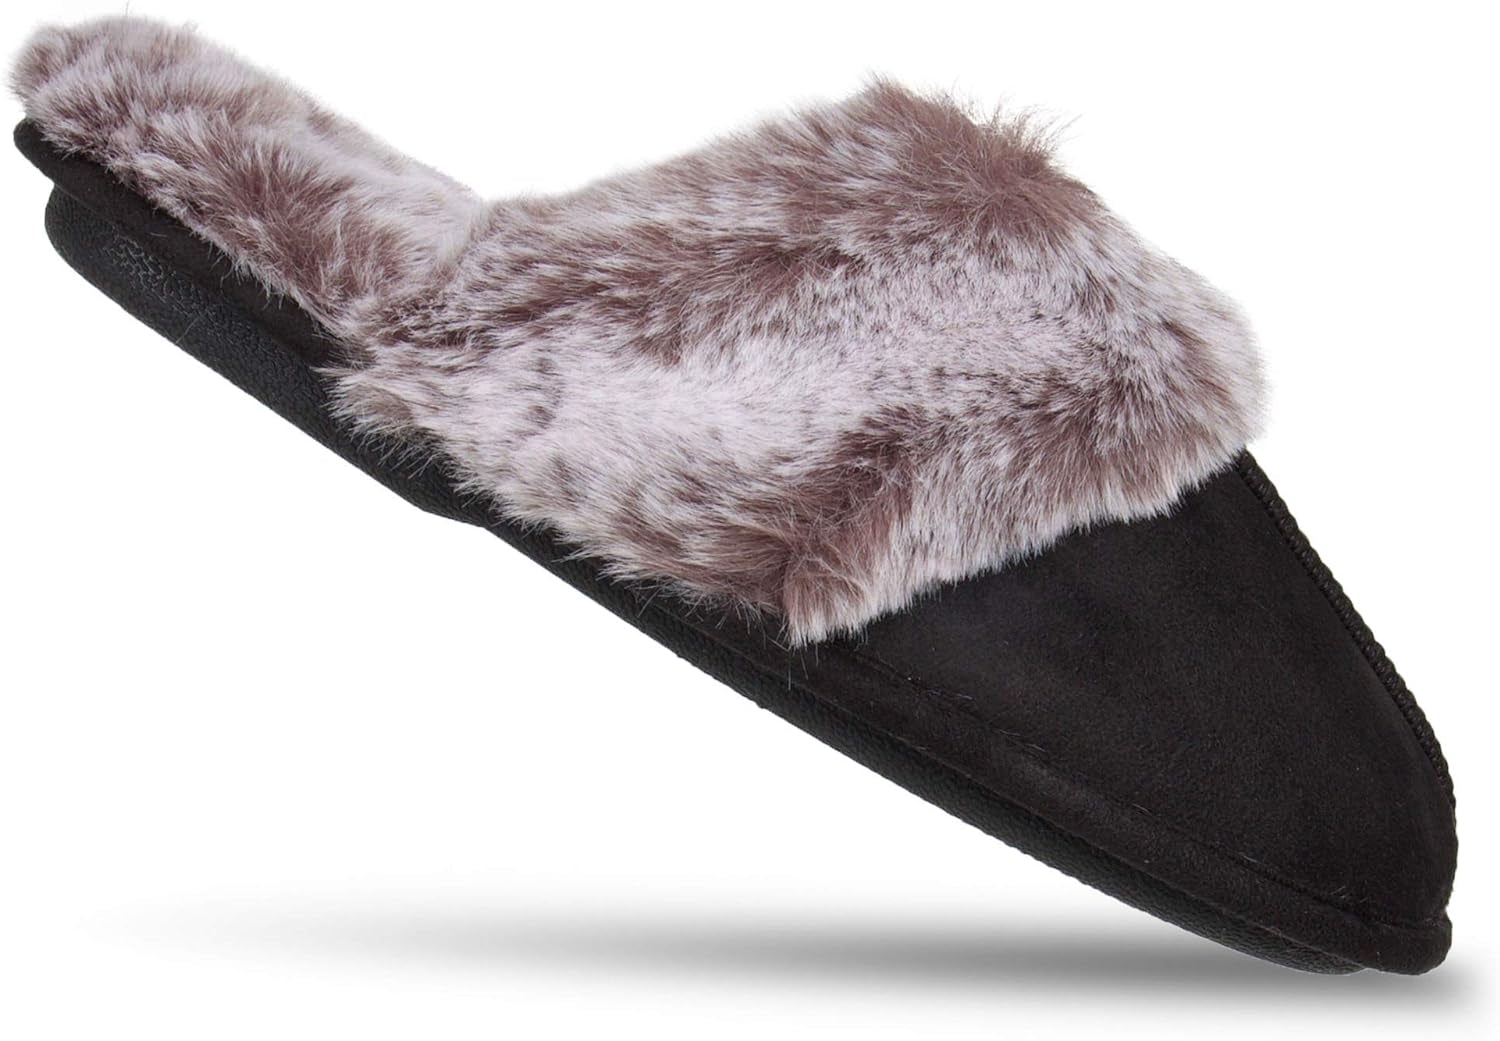 " Women's Cozy Faux Fur House Slipper Scuff with Memory Foam and Anti-Skid Sole"